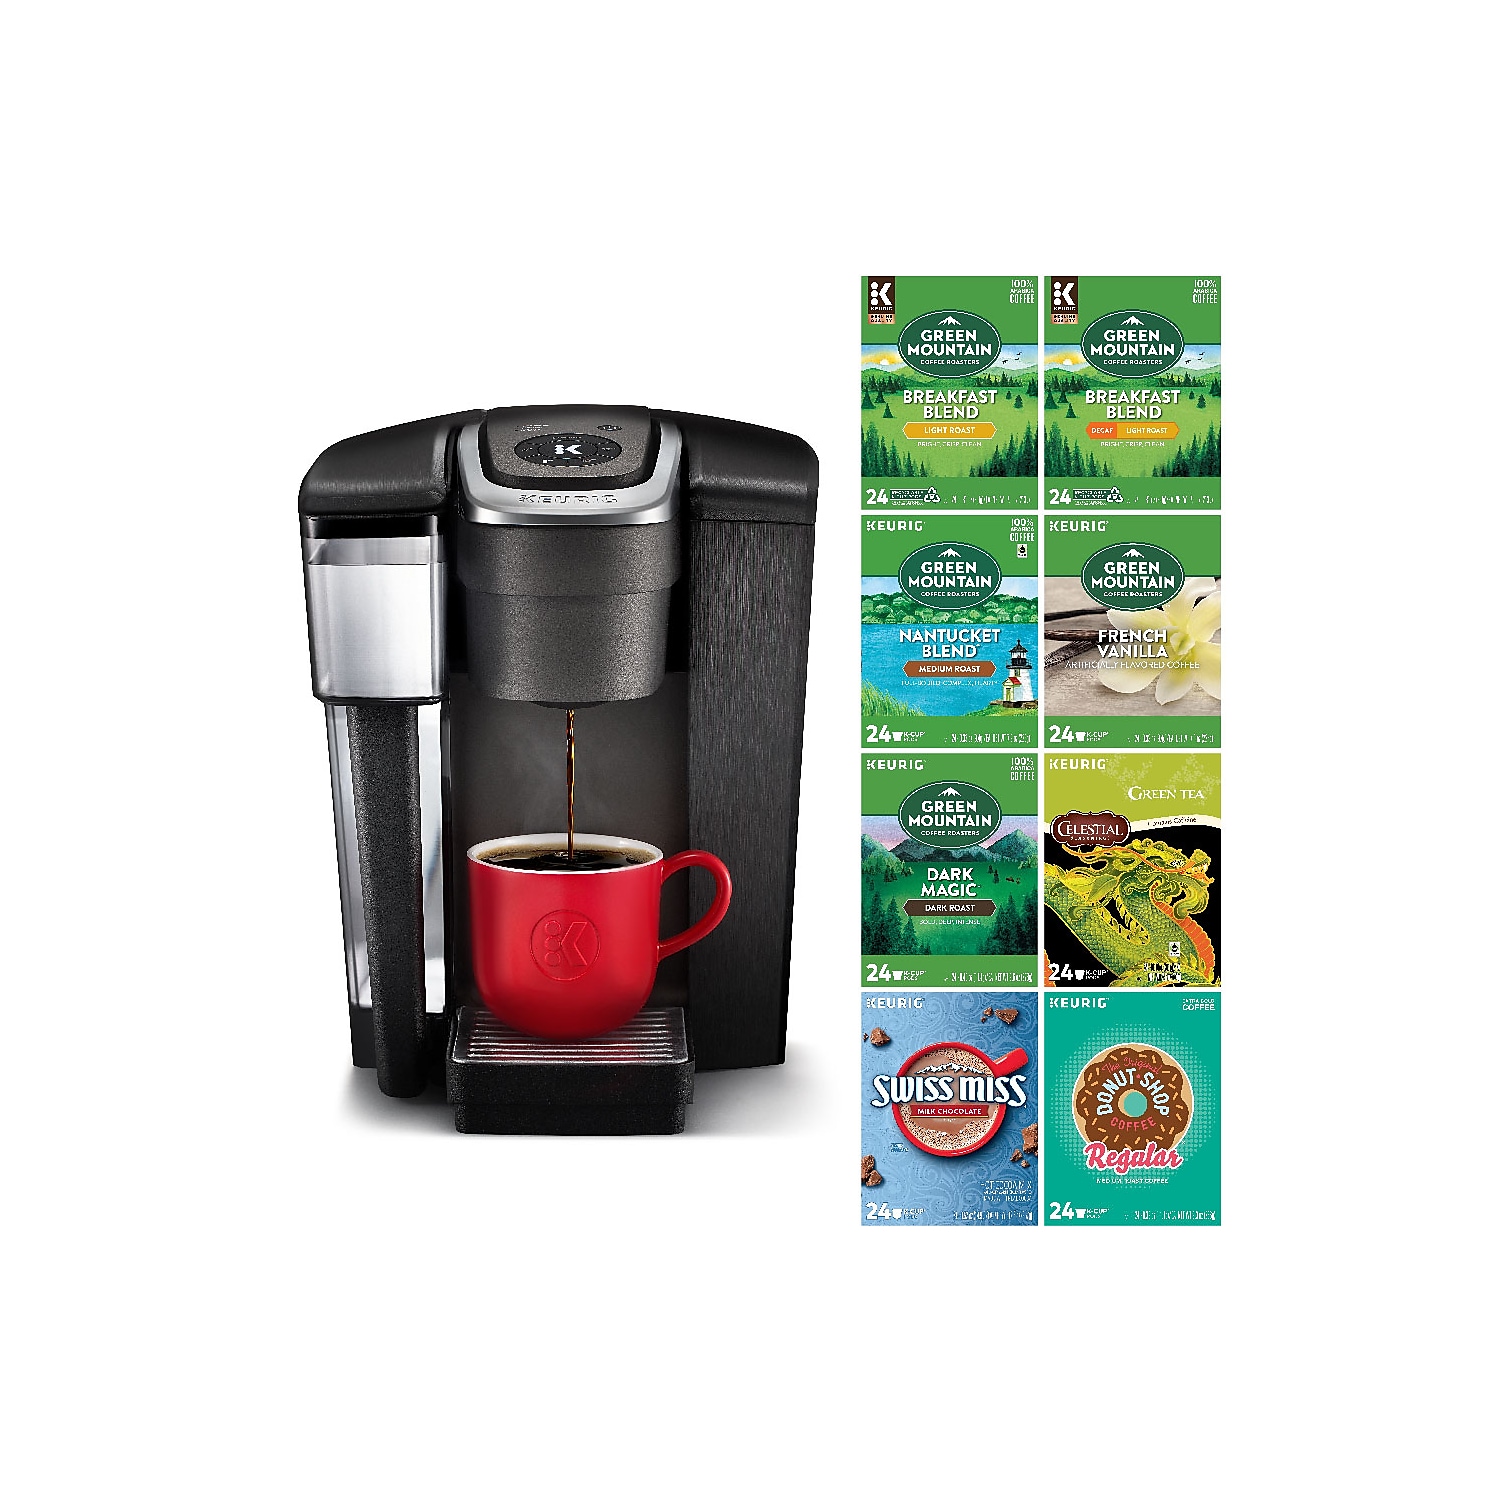 Keurig K1500 Bundle K-Cup Coffee Maker with Variety Pack of 192 K-Cup Pods 24375278 - image 1 of 2